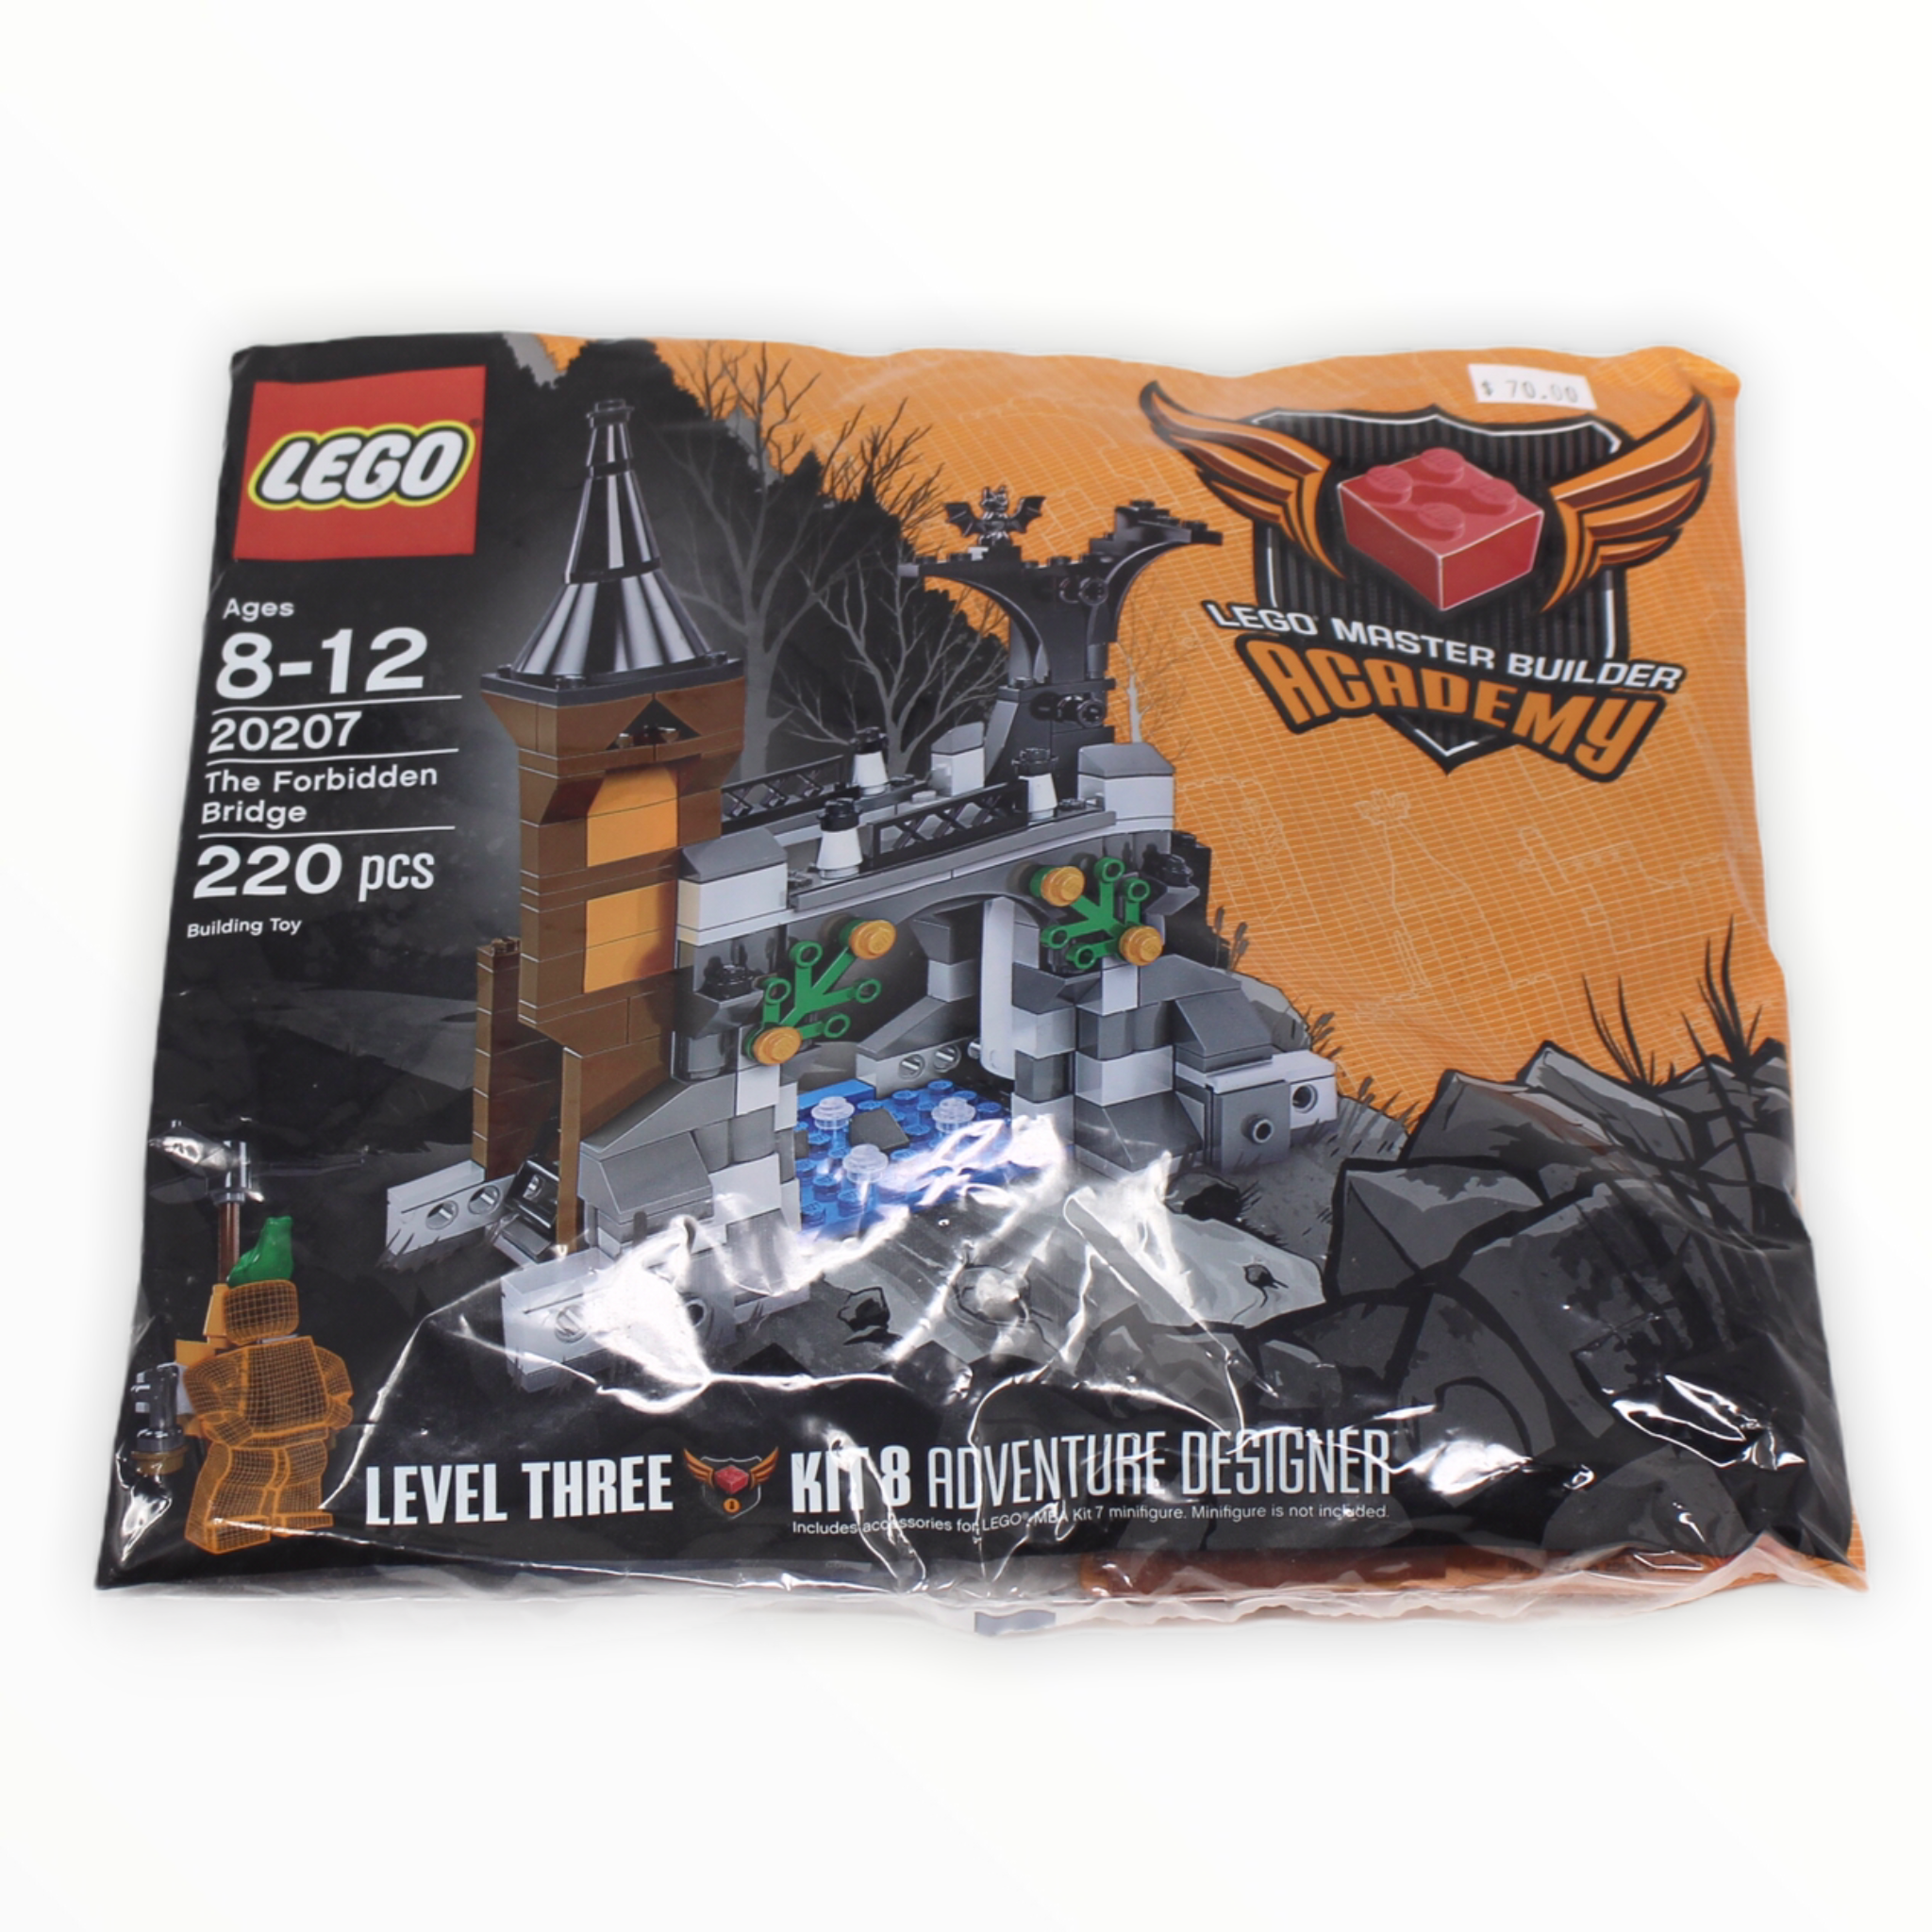 Polybag 20207 LEGO Master Builder Academy Level 3 - Kit 8 The Forbidden Bridge